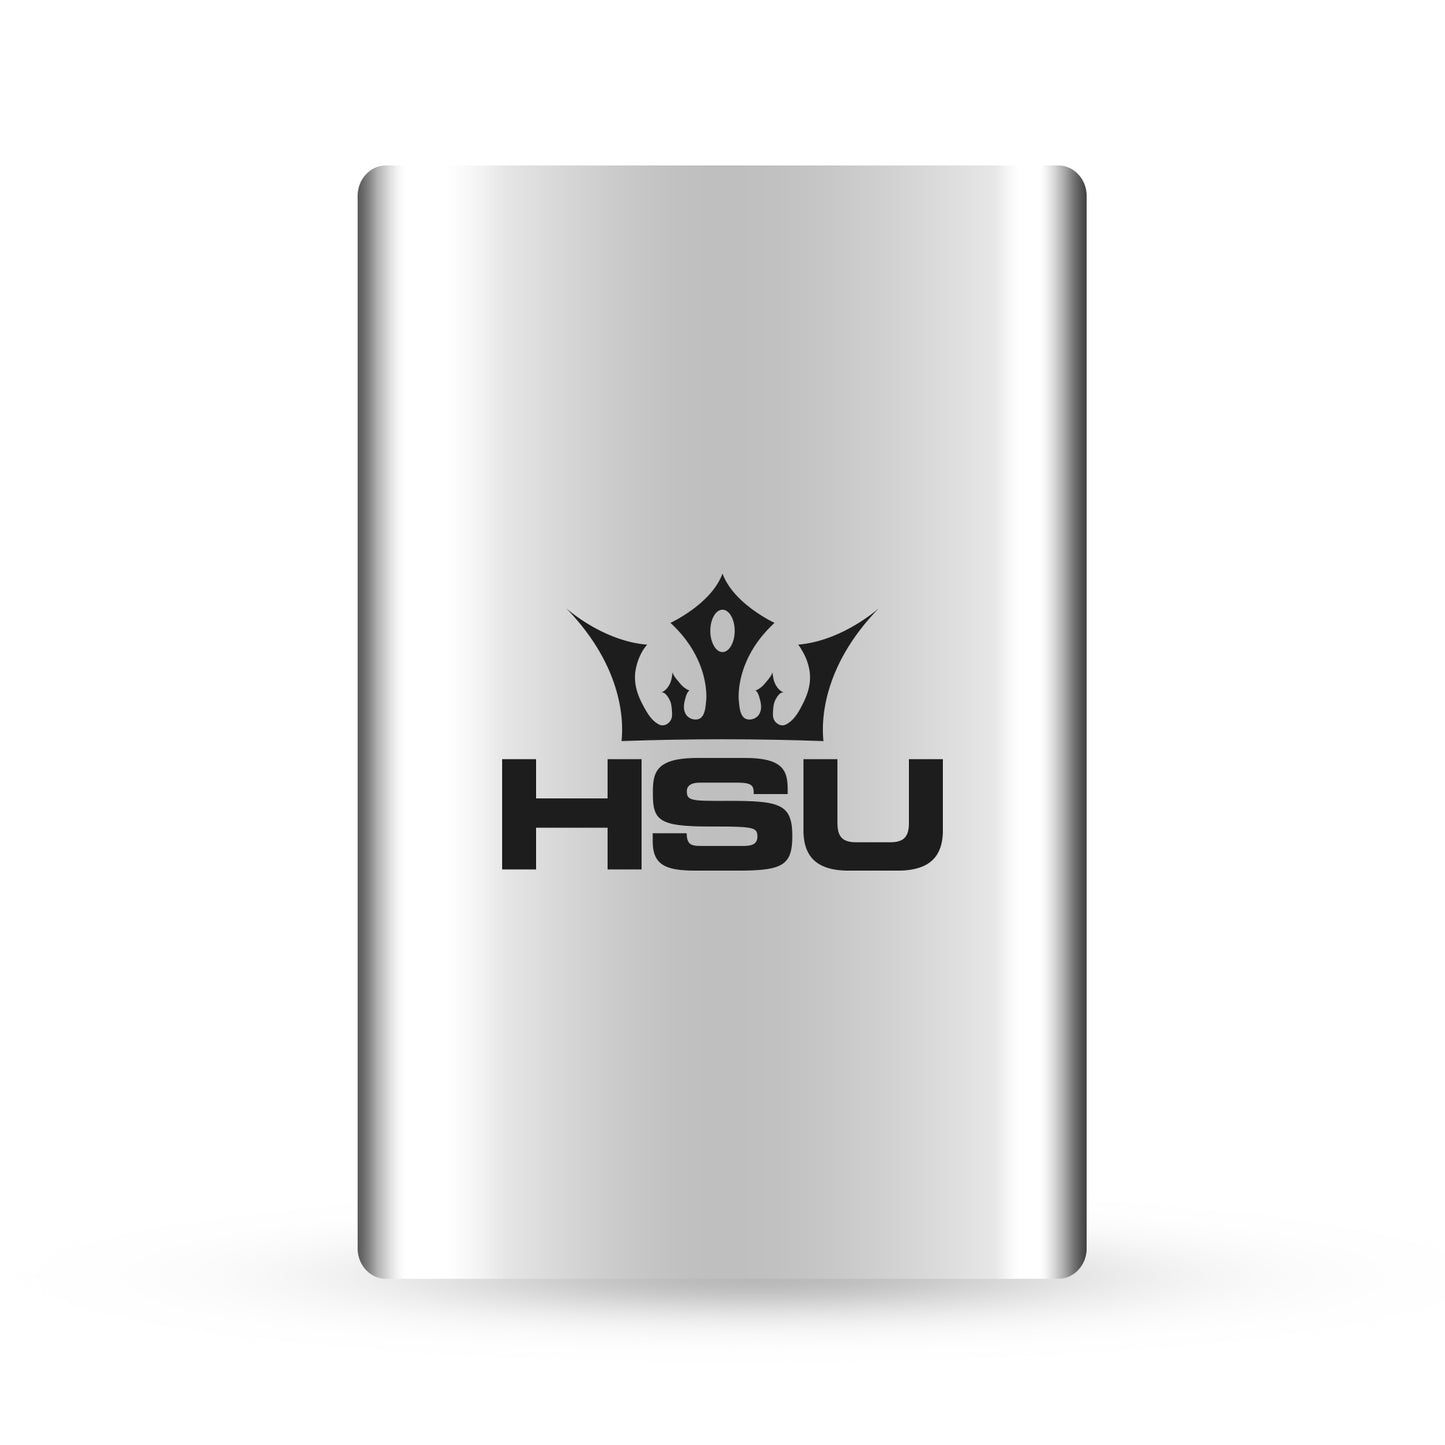 HSU Portable Powerbank Charger (Silver)